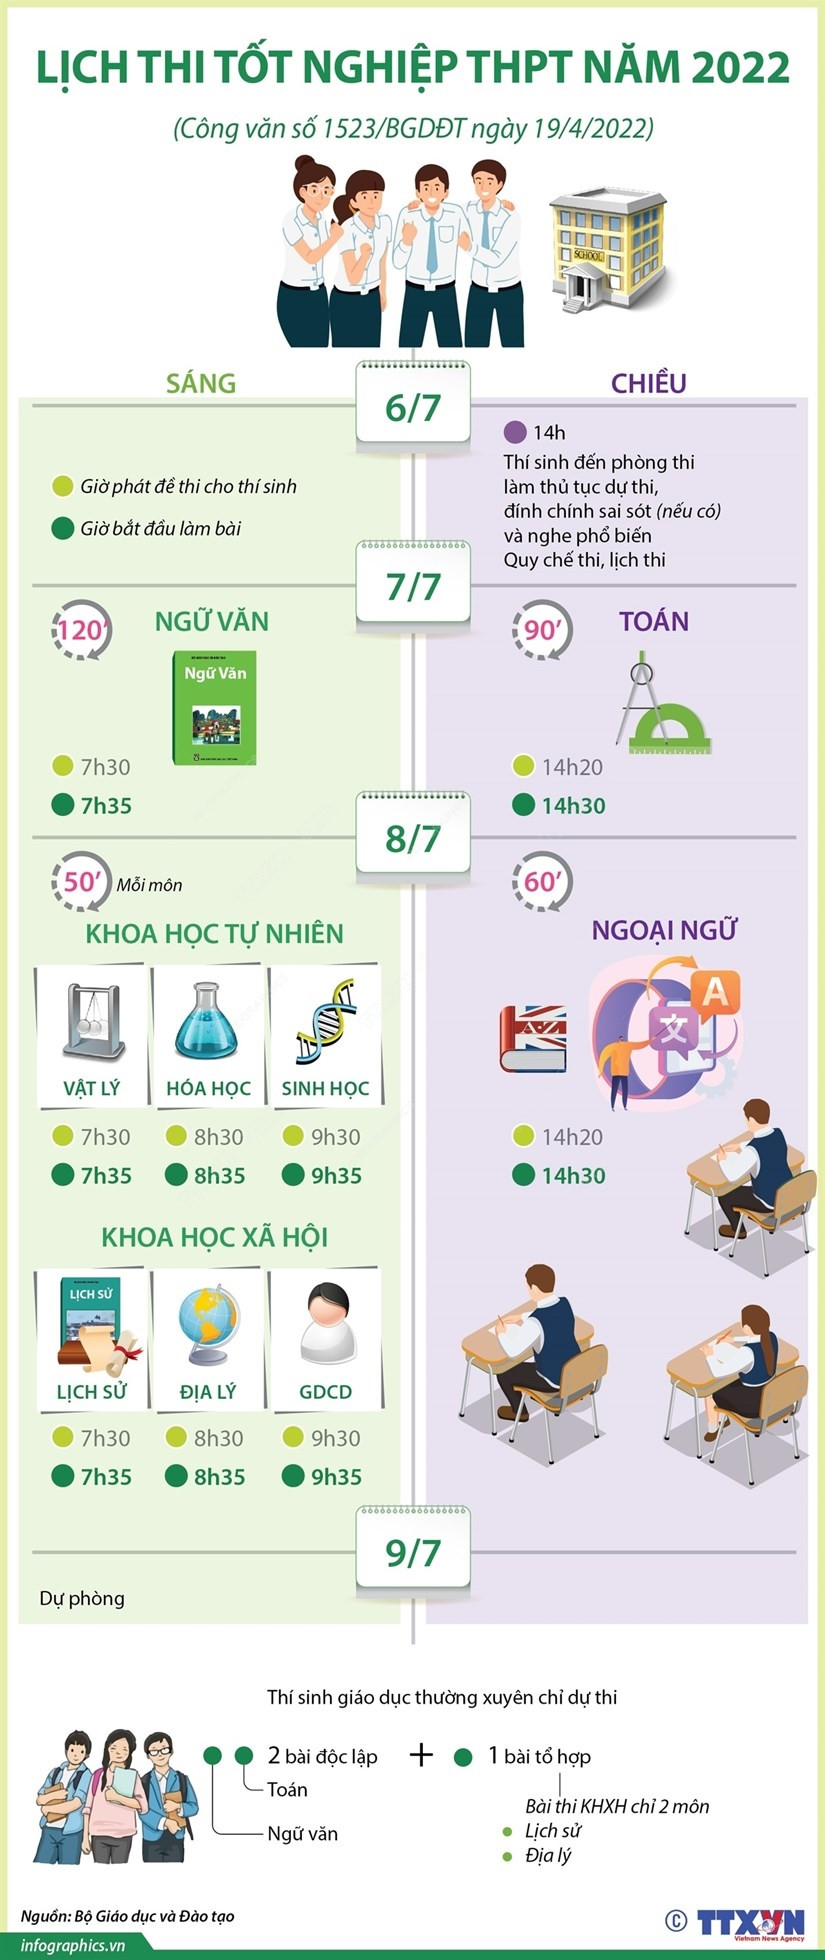 [Infographics] Lich thi tot nghiep Trung hoc Pho thong nam 2022 hinh anh 1